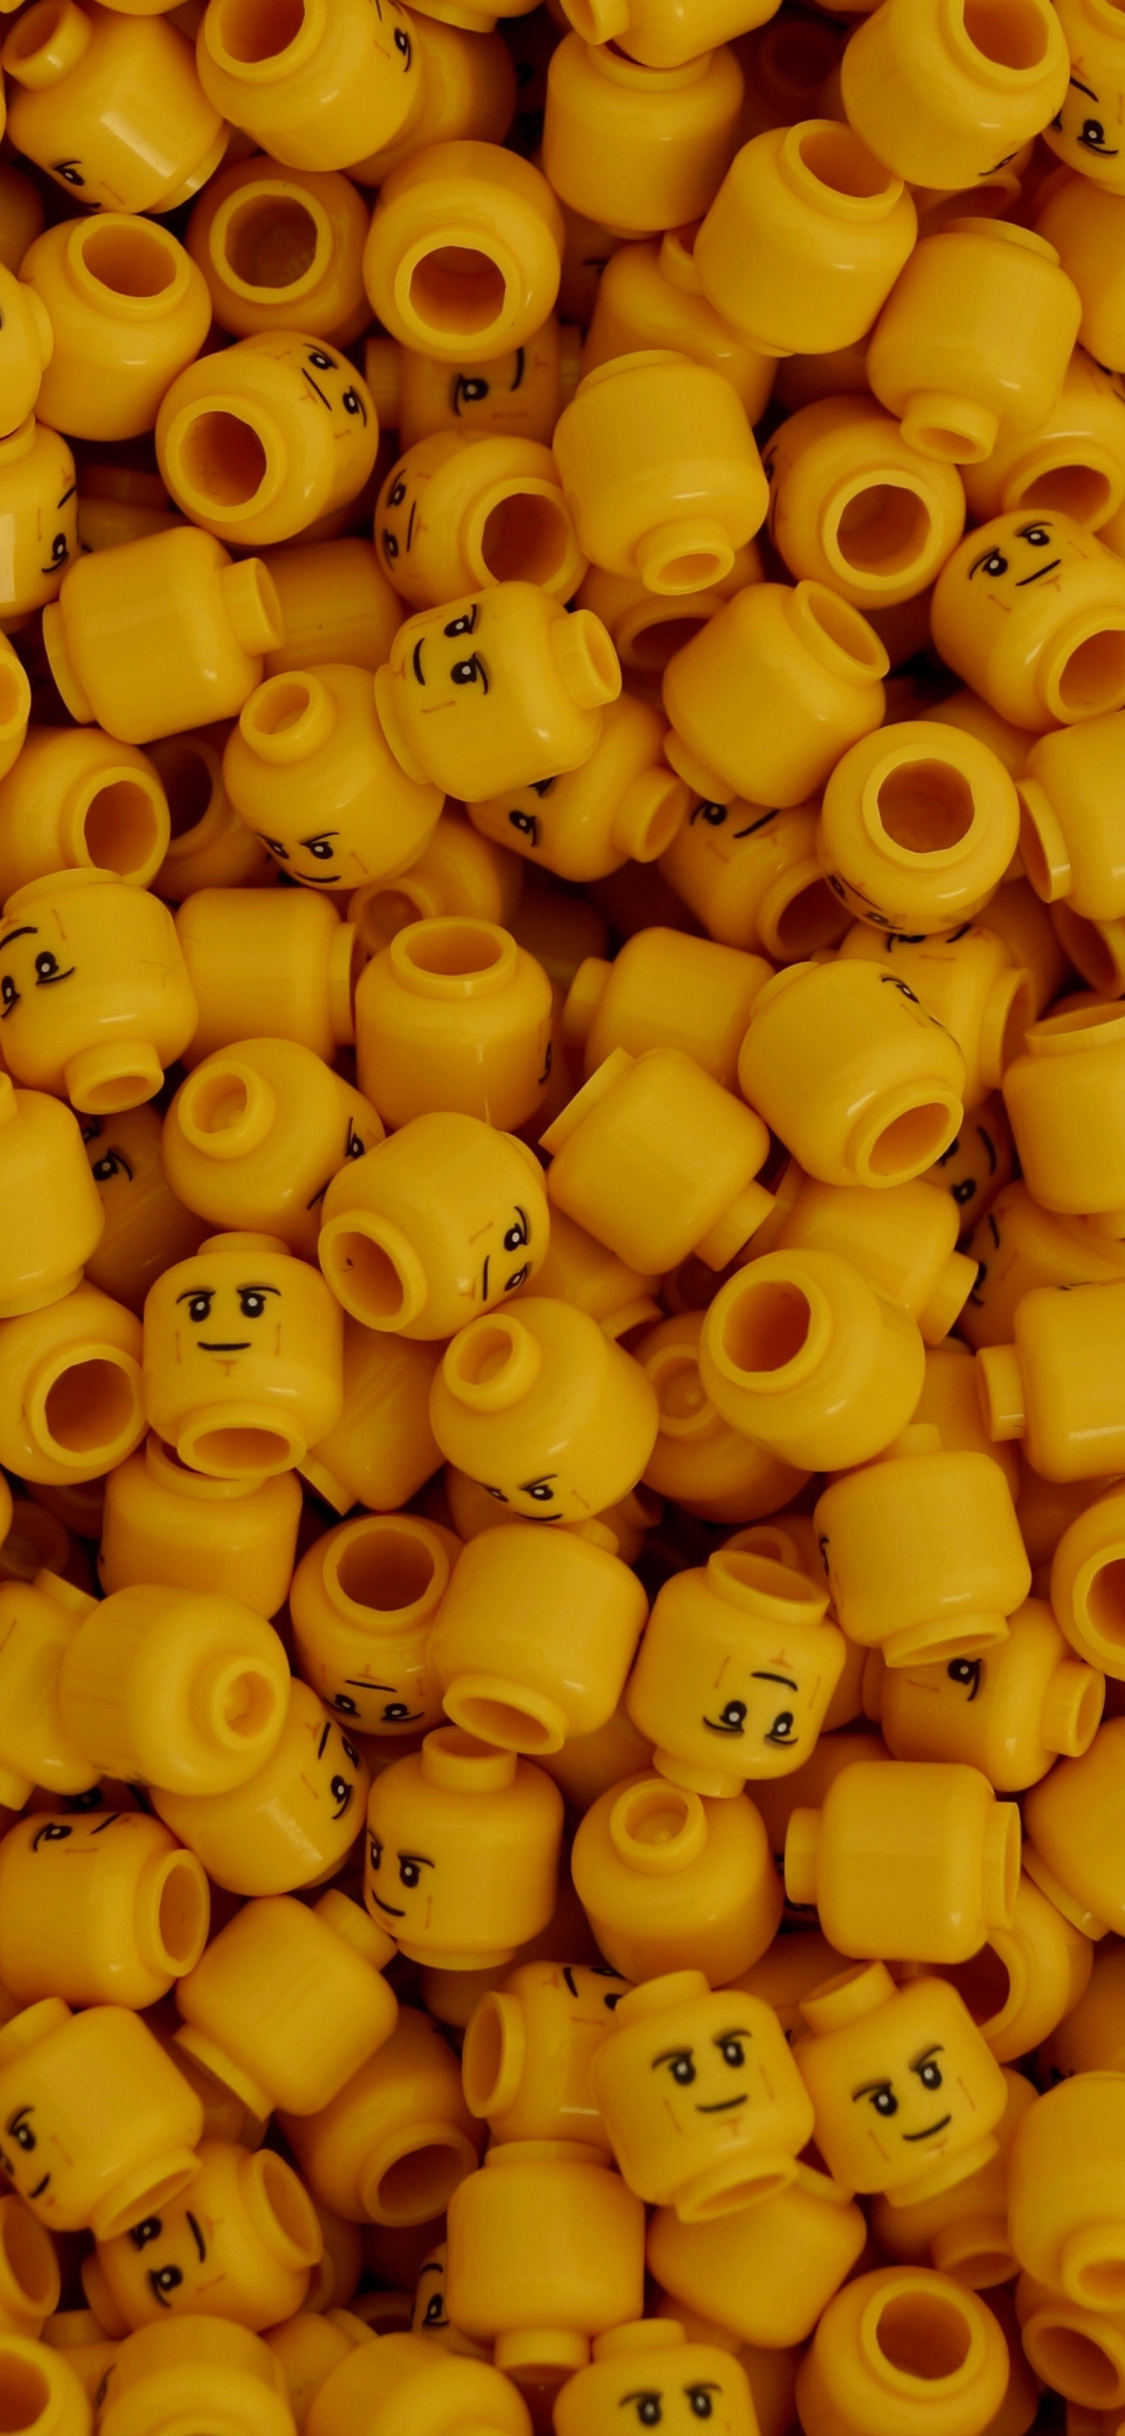 Yellow, Lego, toy, 1125x2436 wallpaper